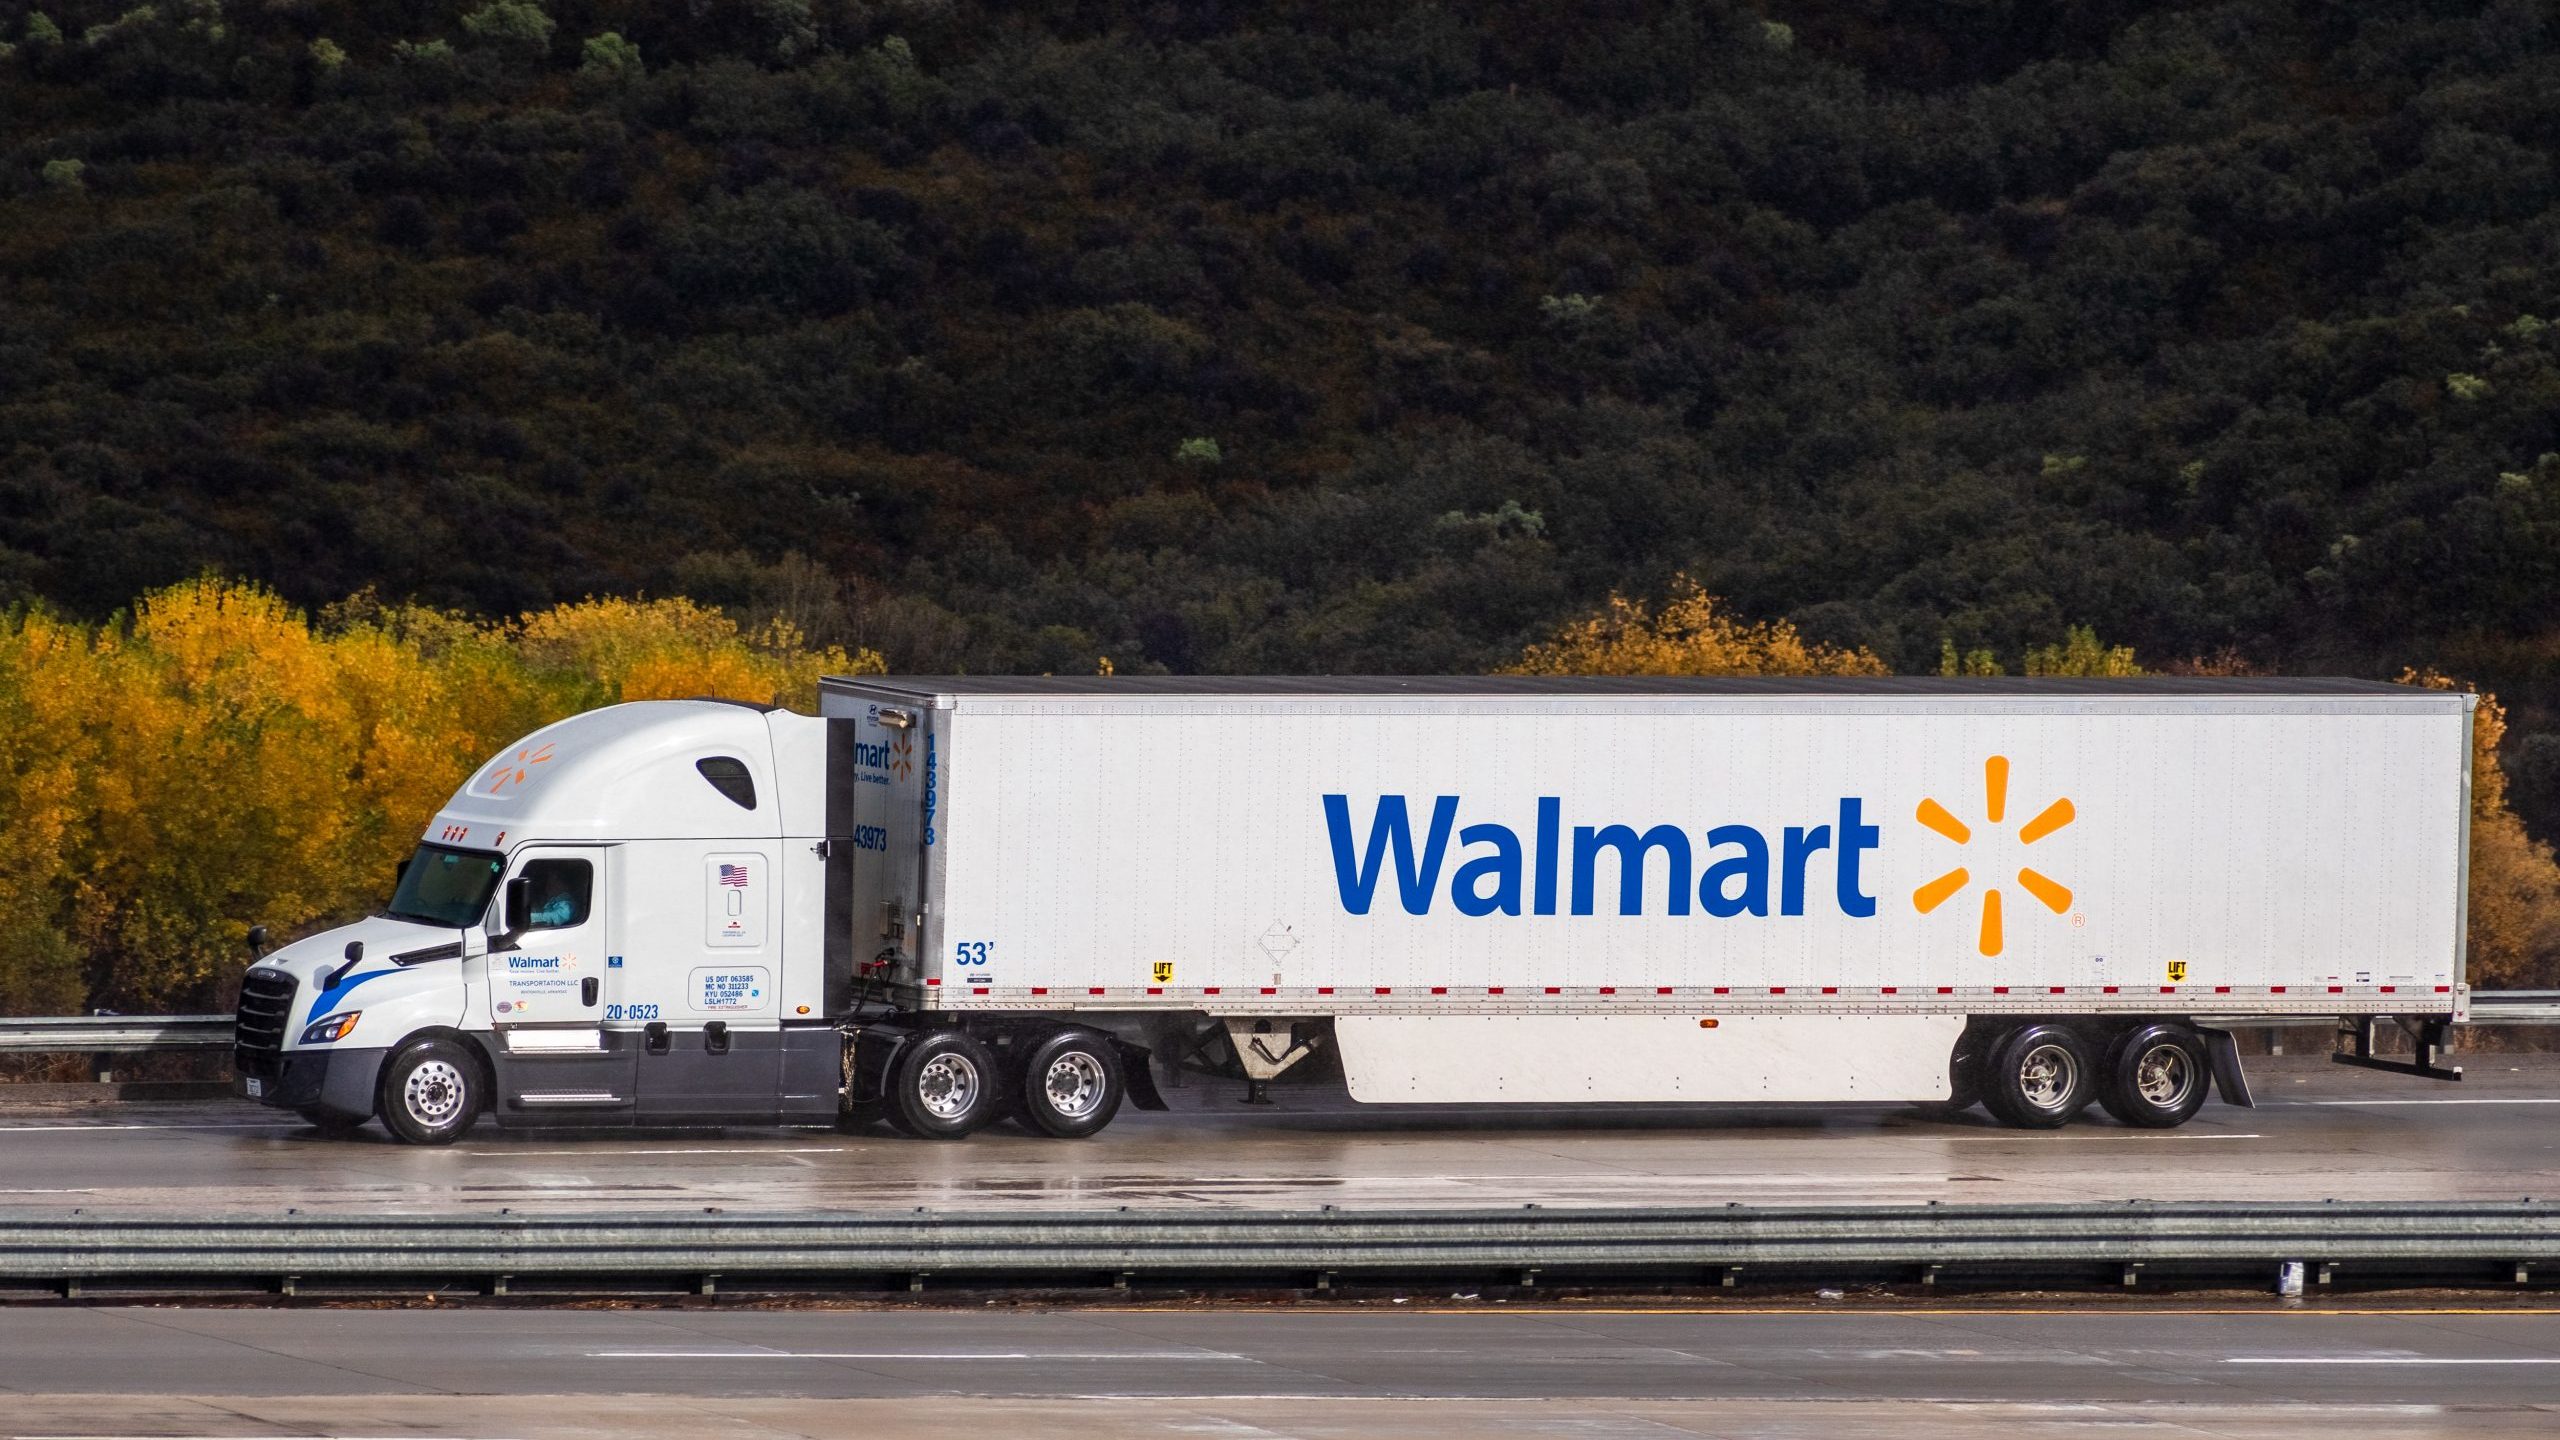 Walmart truck driving on highway